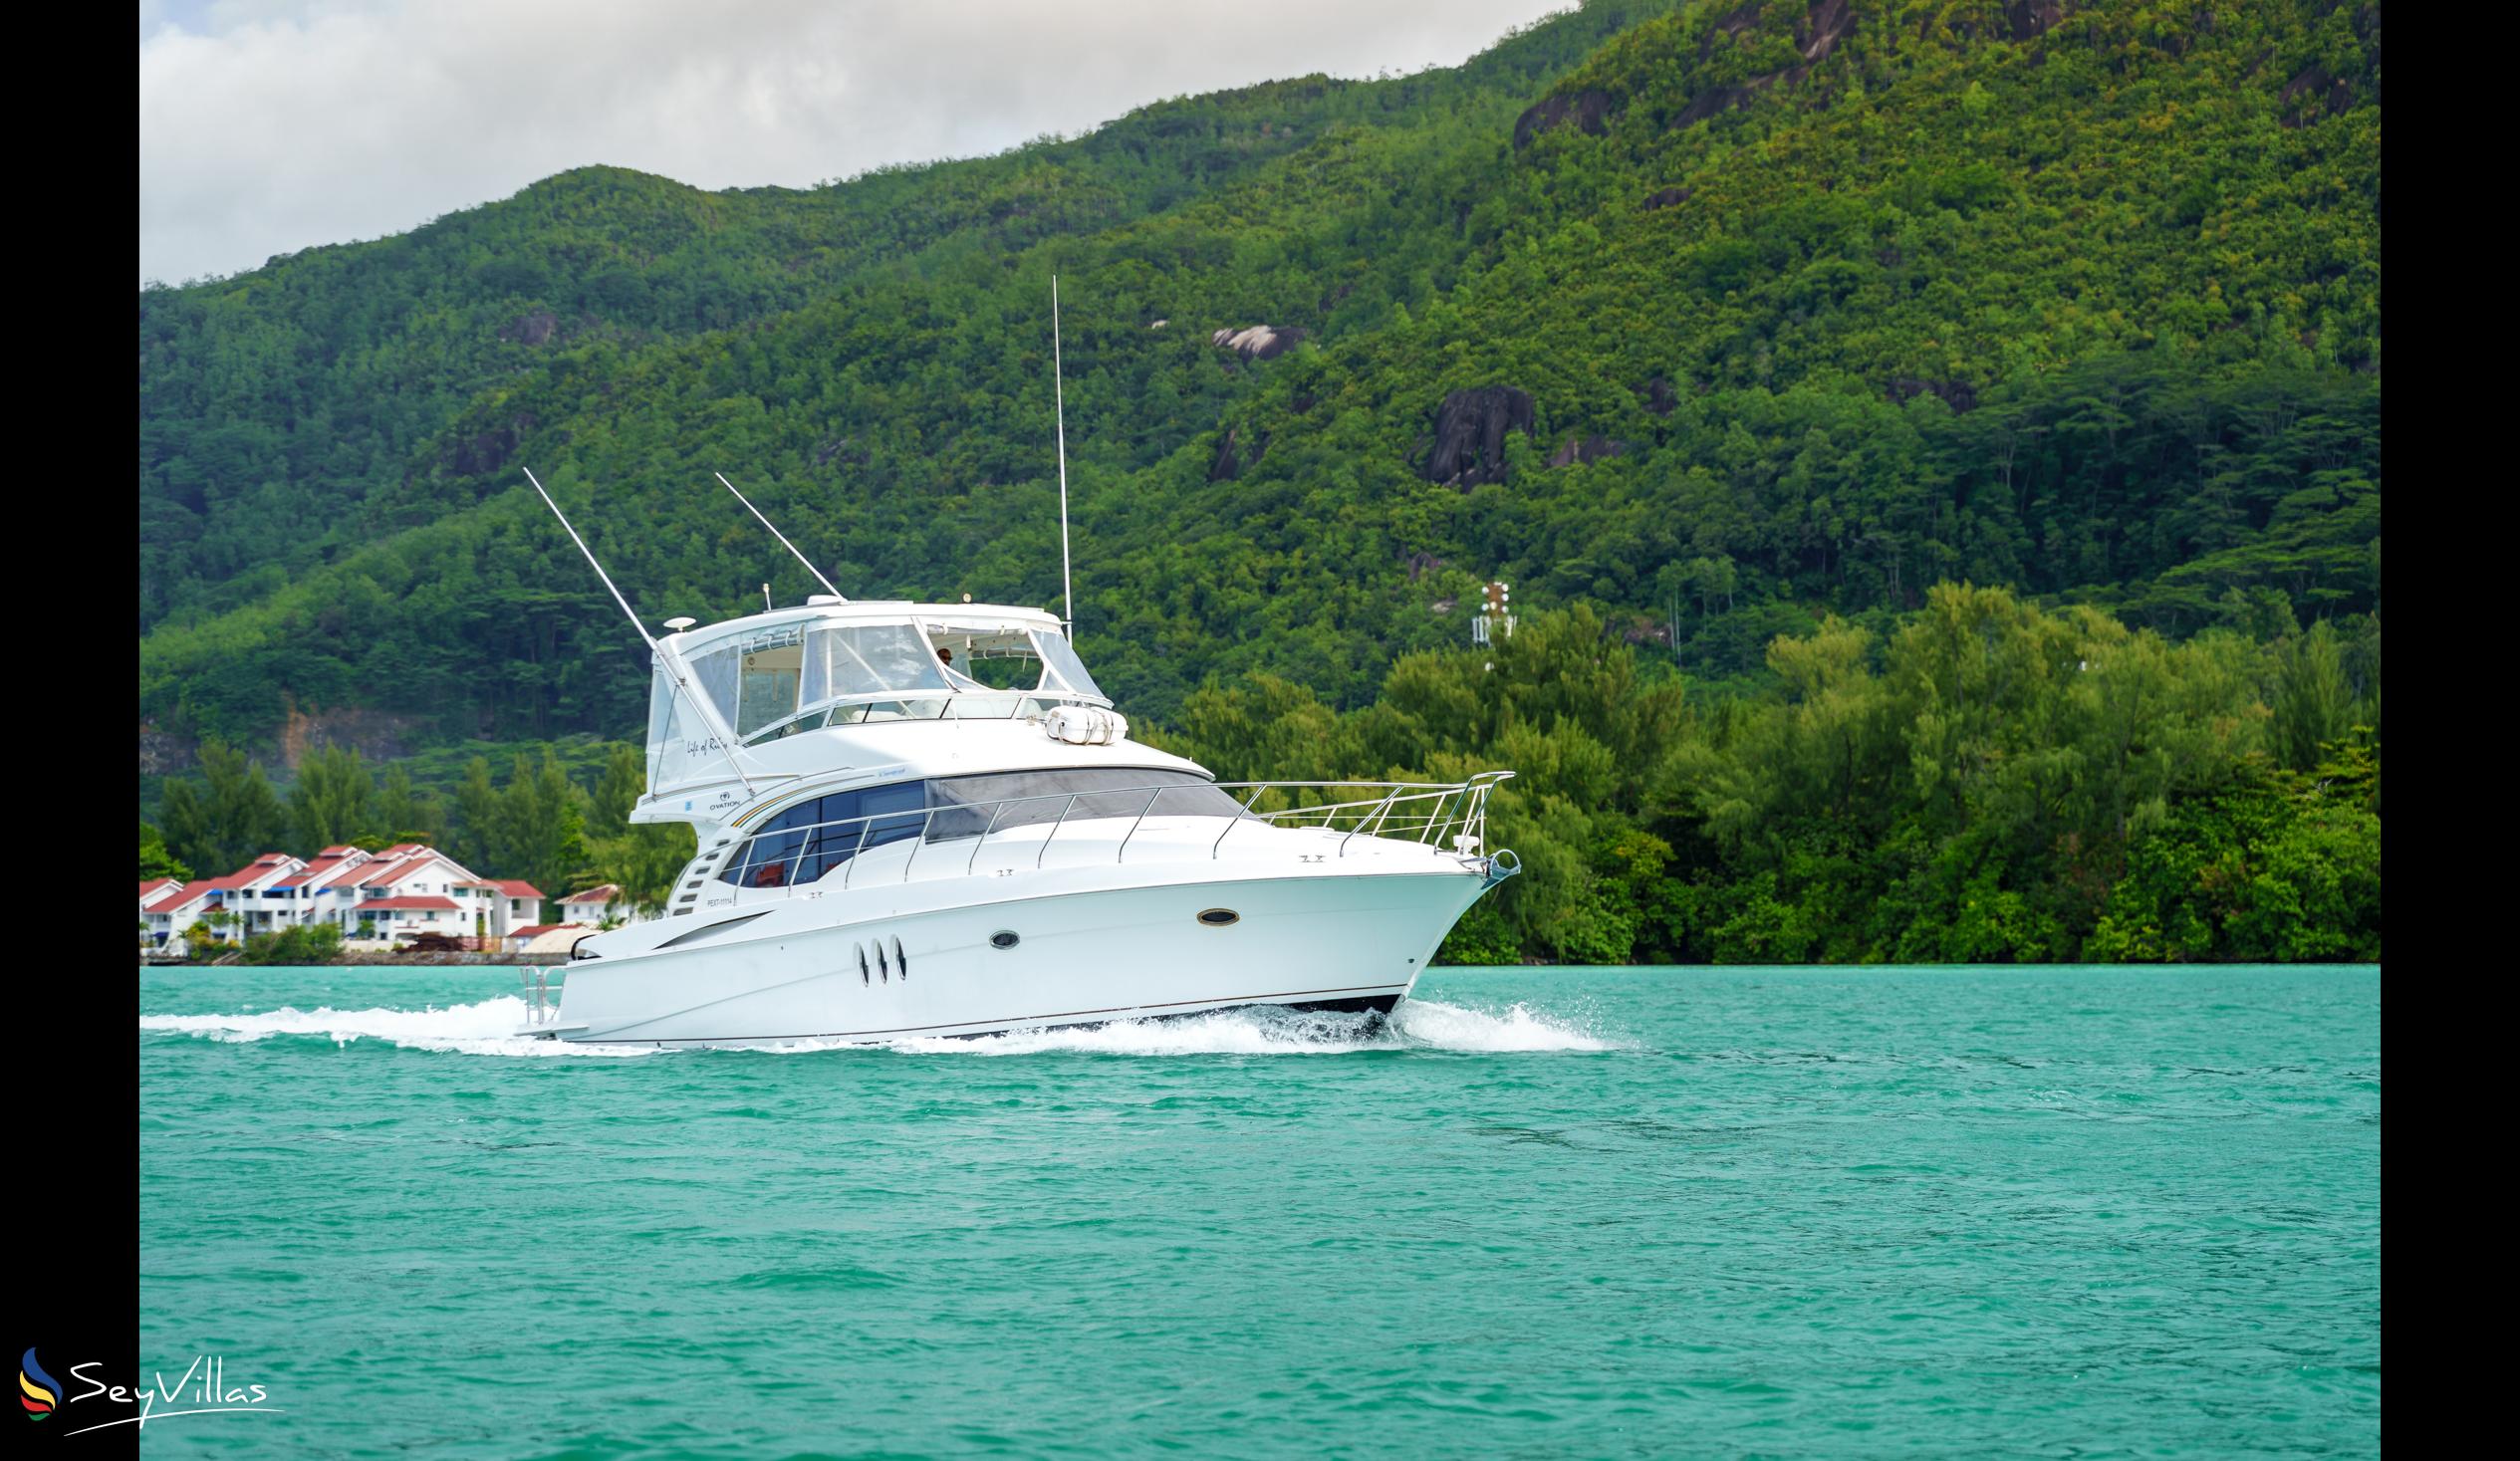 Photo 41: Seyscapes Yacht Charter - Full Charter Life of Riley - Seychelles (Seychelles)